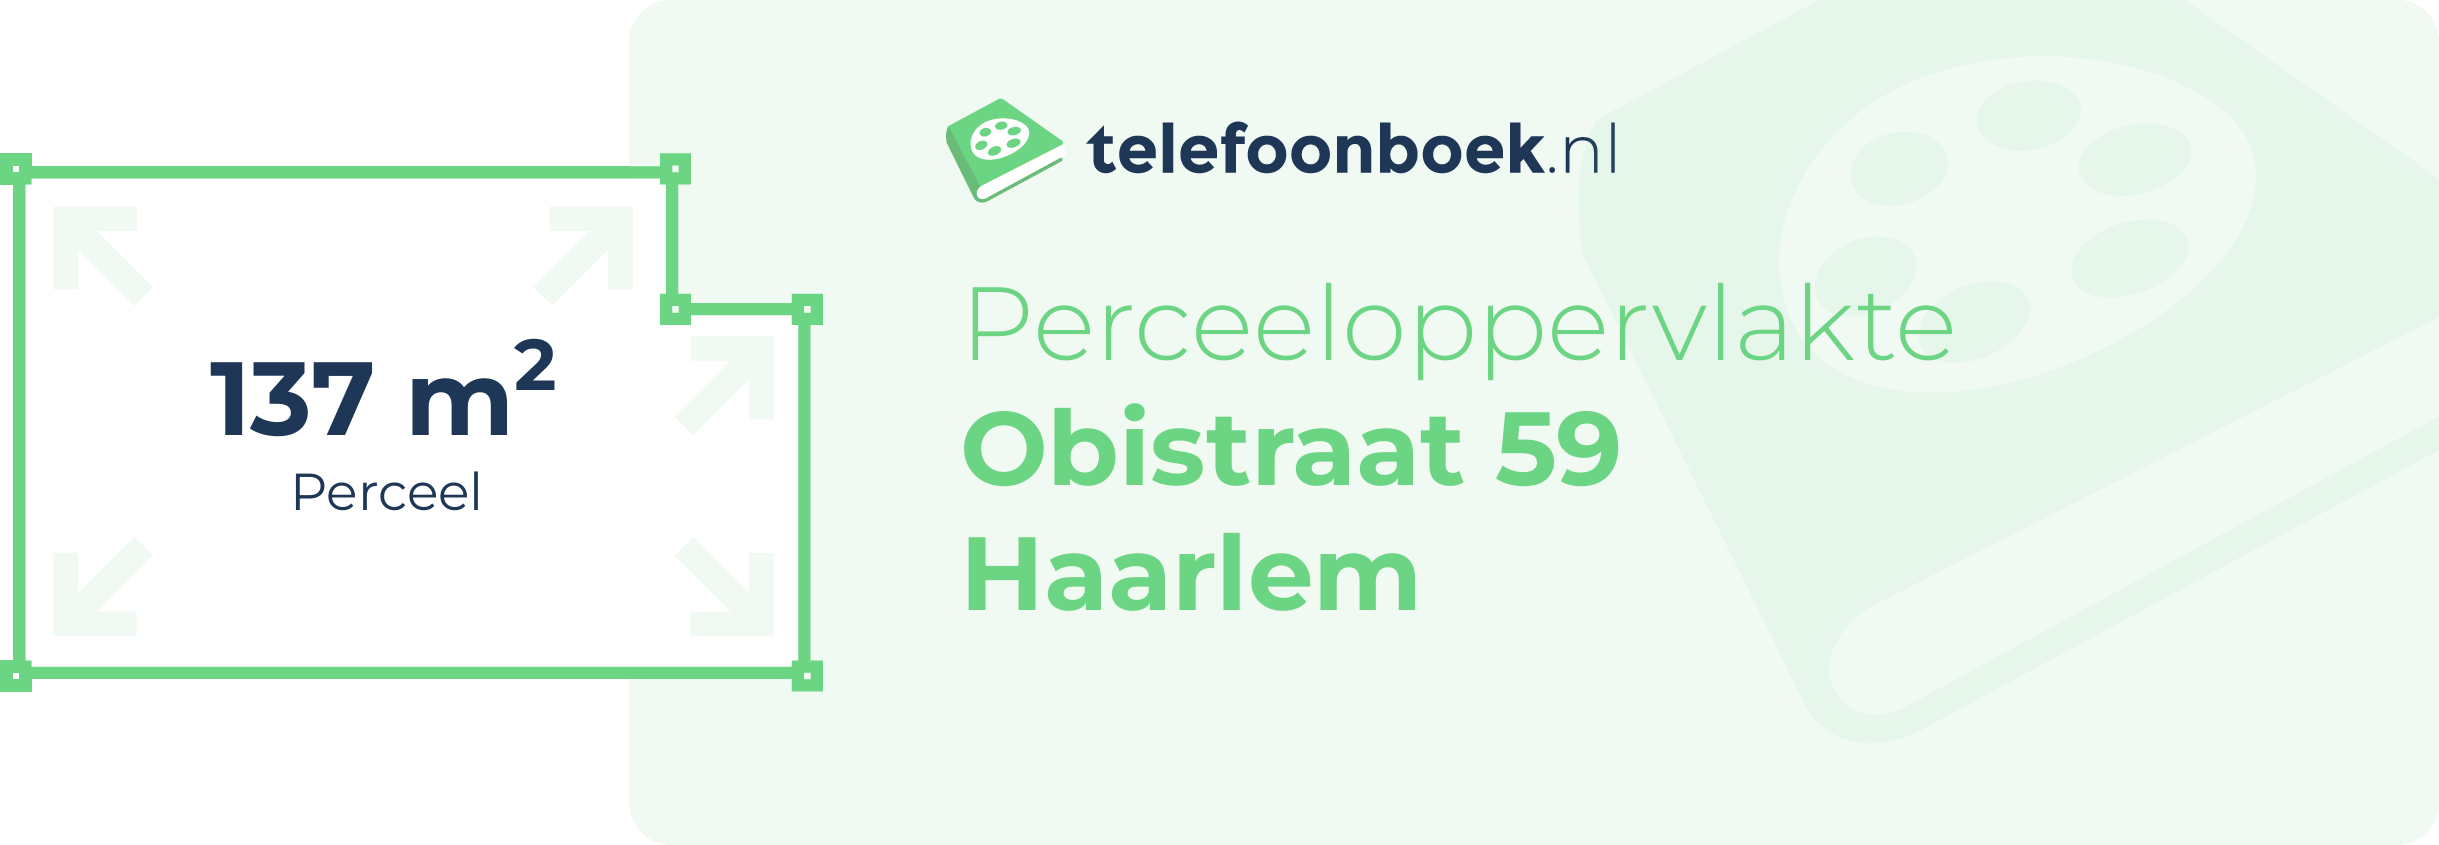 Perceeloppervlakte Obistraat 59 Haarlem